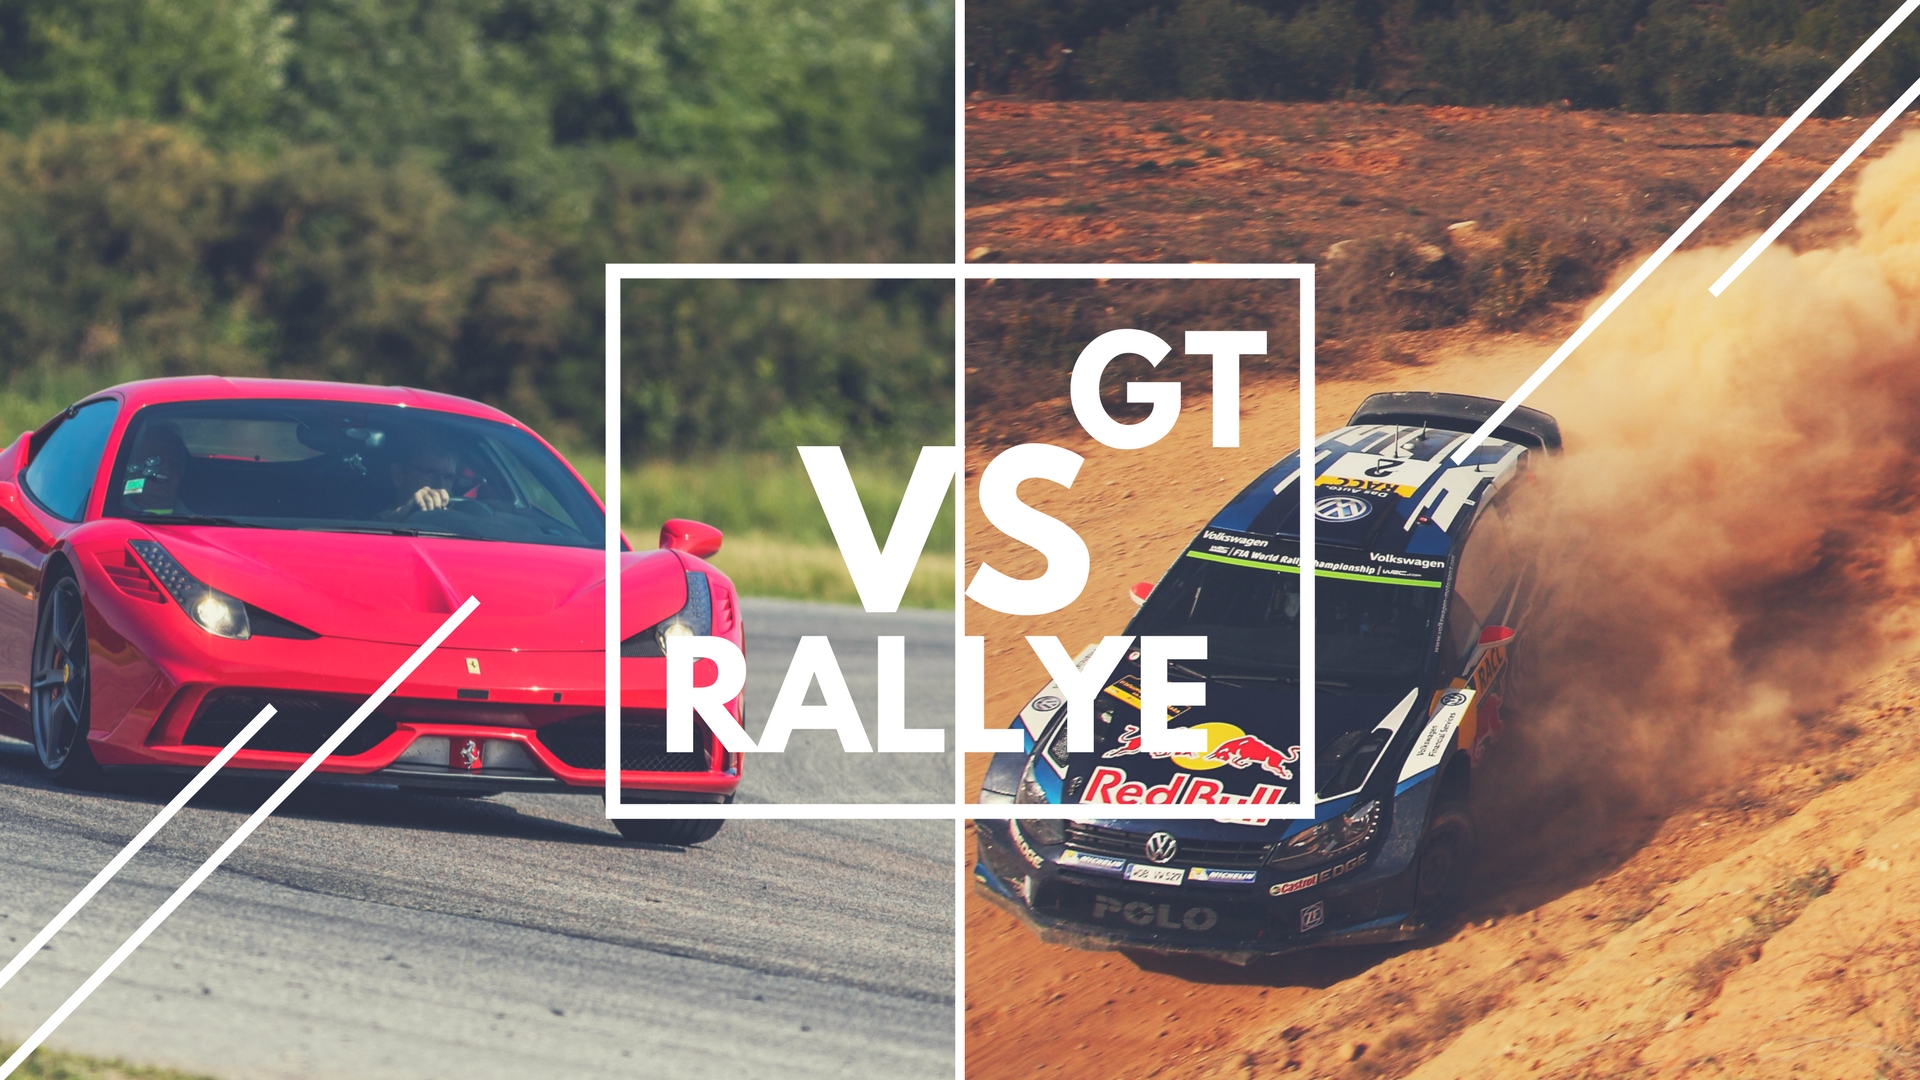 Stage Rallye vs Stage GT : un choix cornélien !